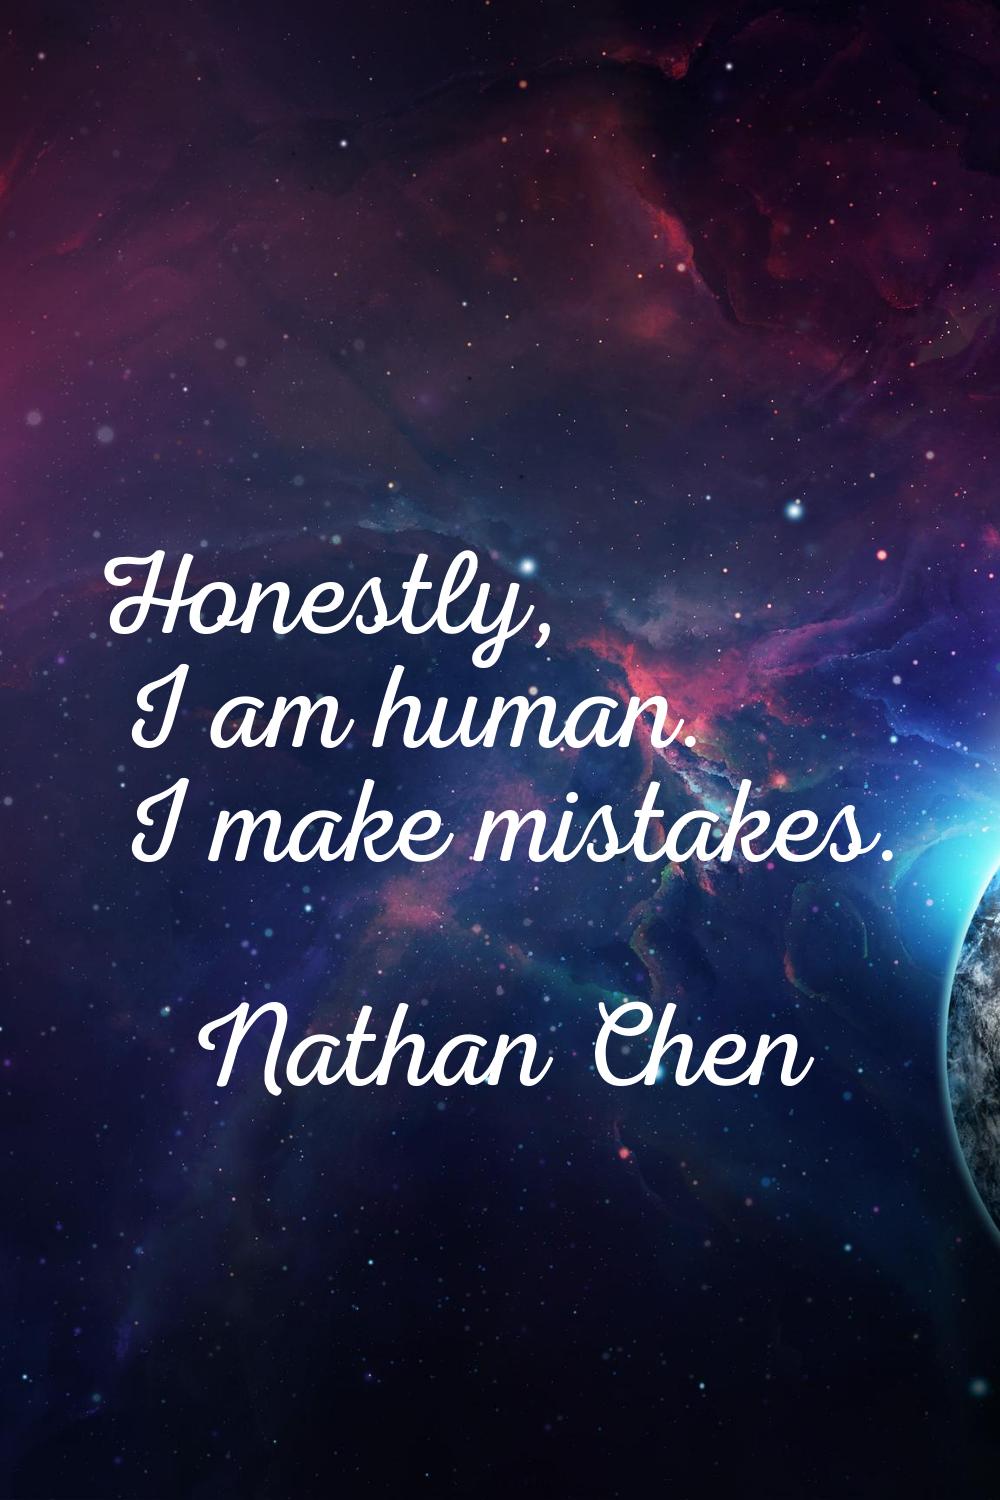 Honestly, I am human. I make mistakes.